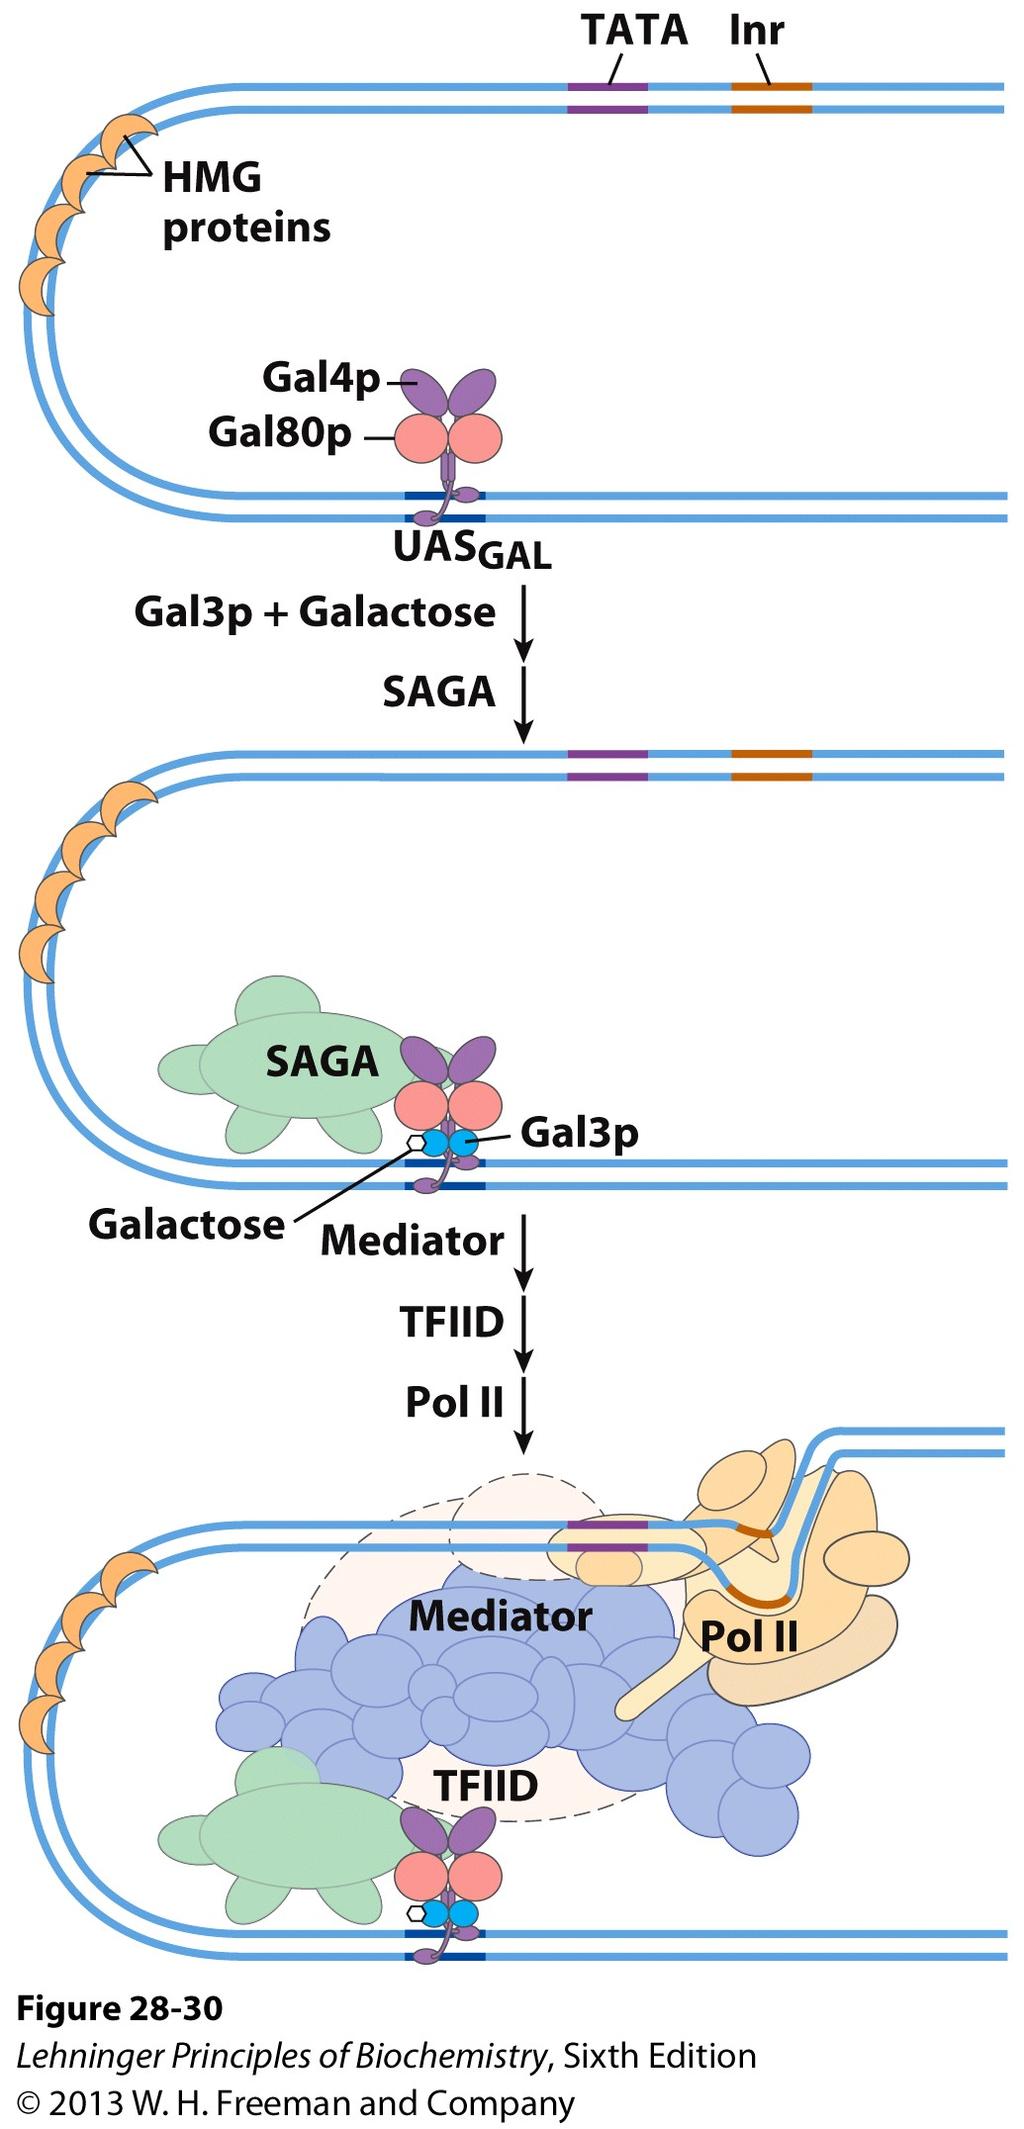 Activation of galactose genes!